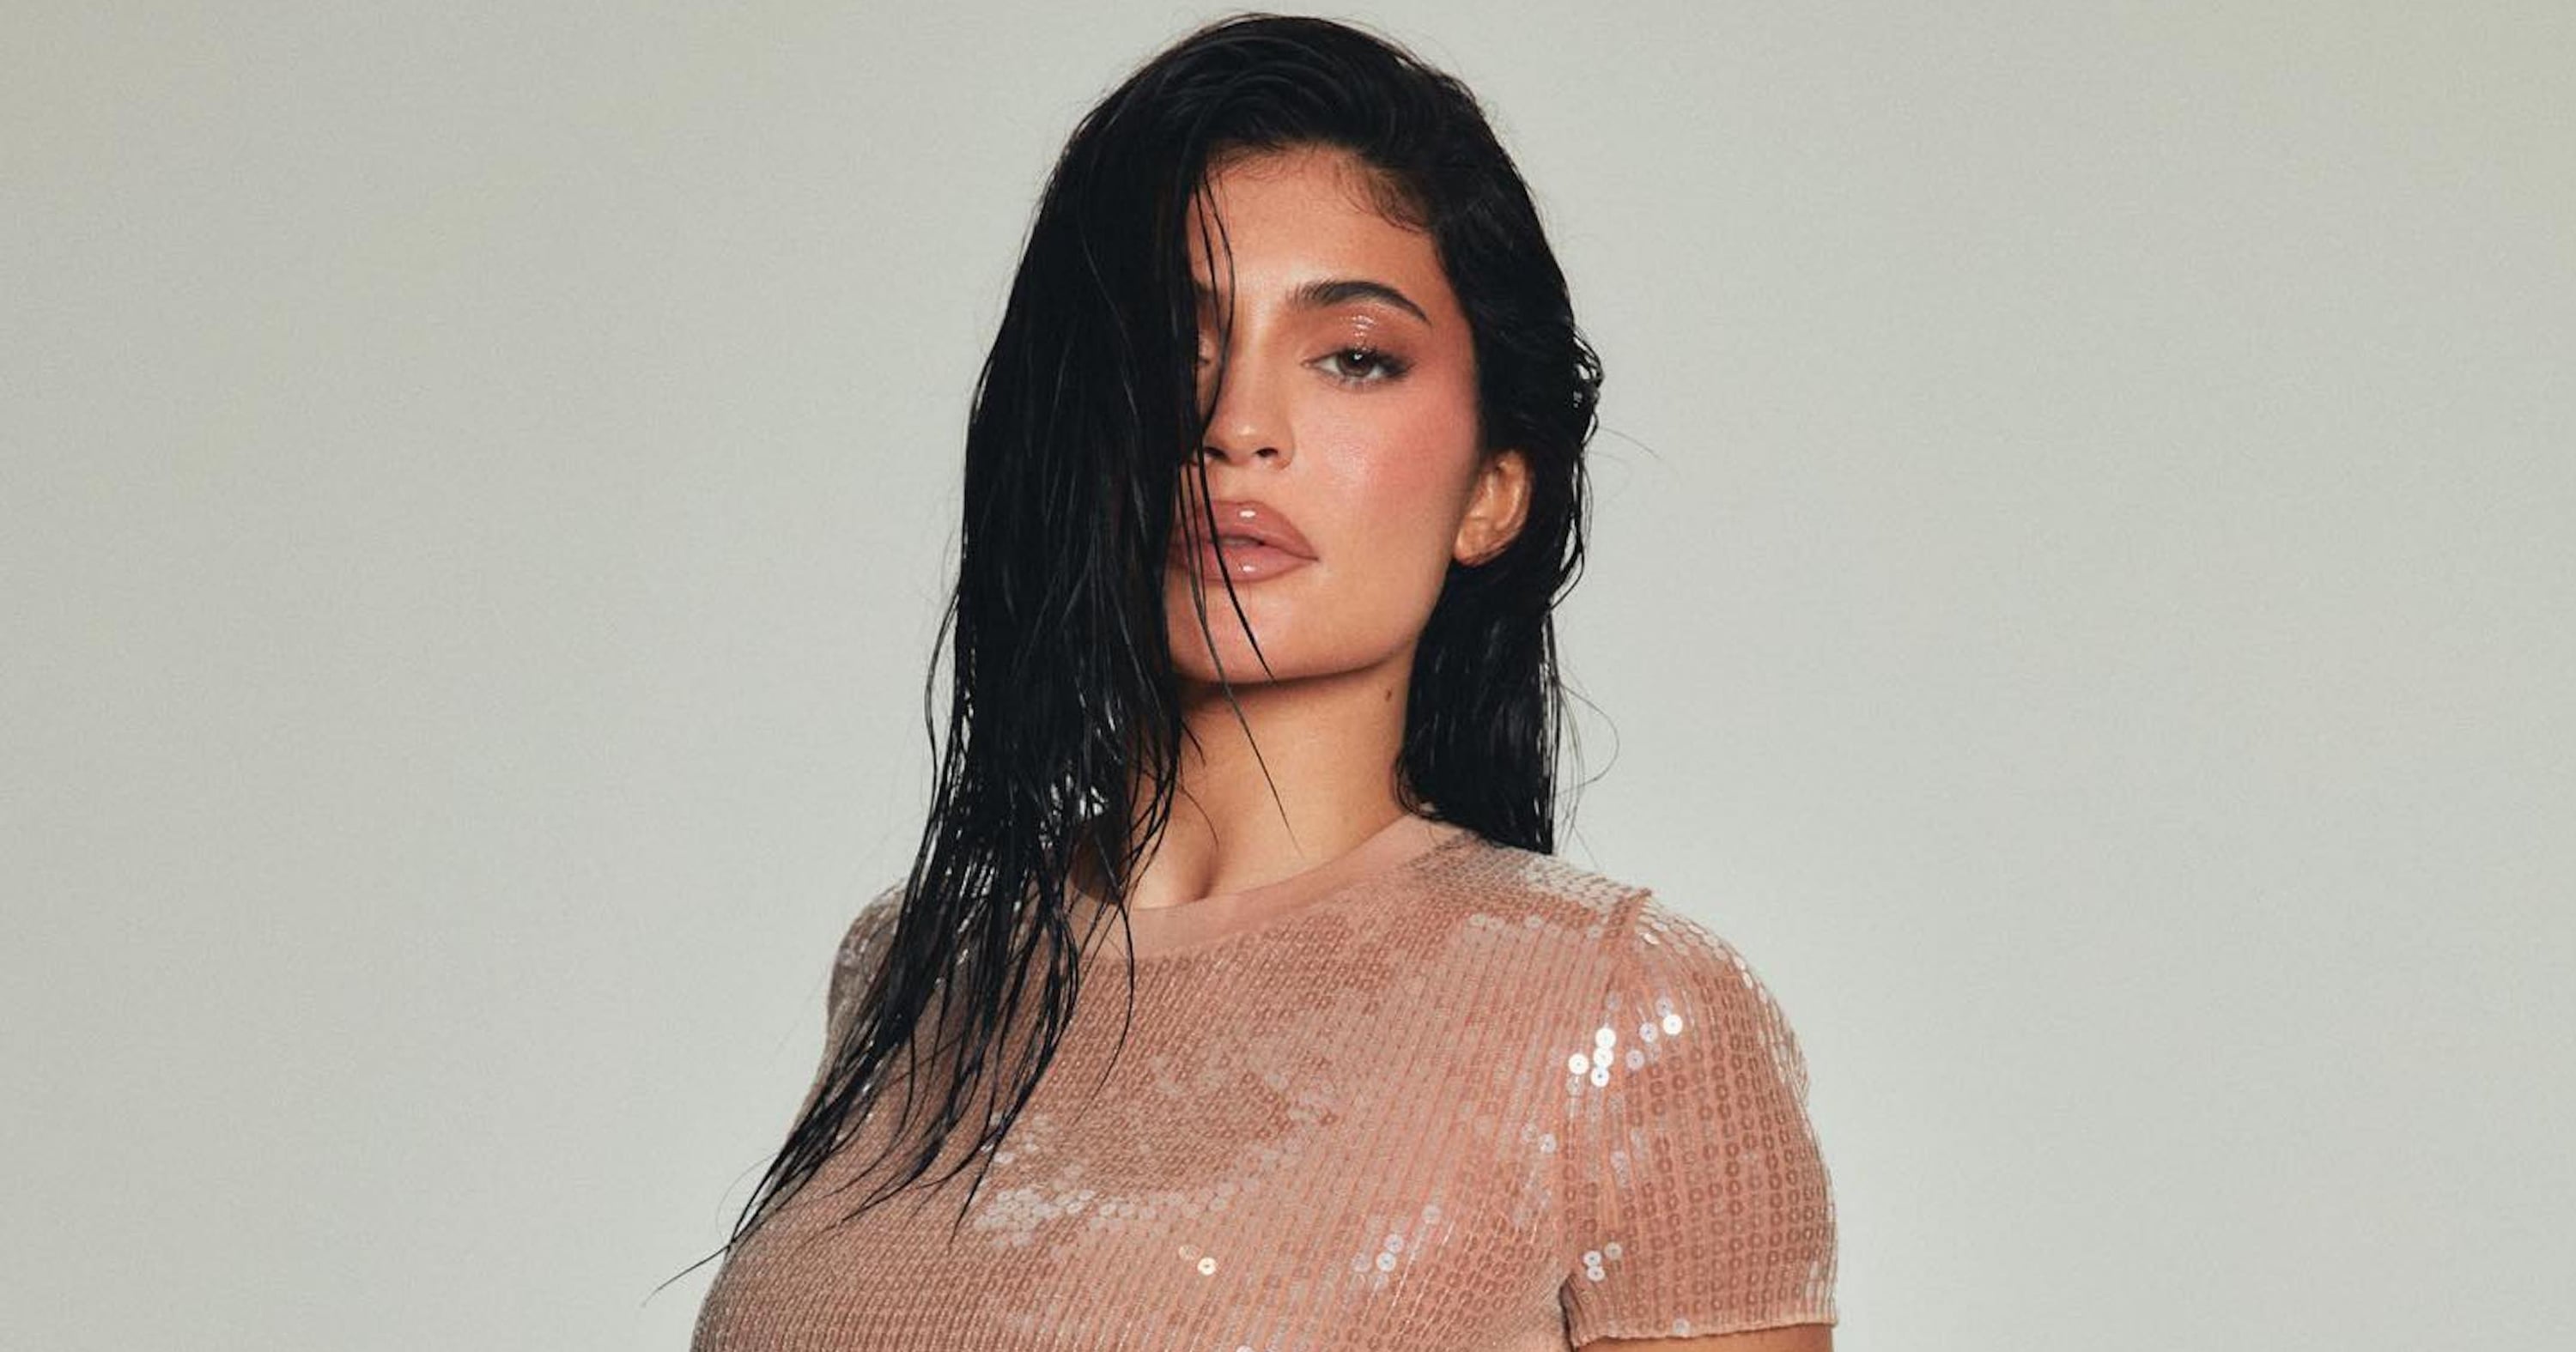 Kylie Jenner Went Makeup-Free While Wearing a Metallic Pink Upside